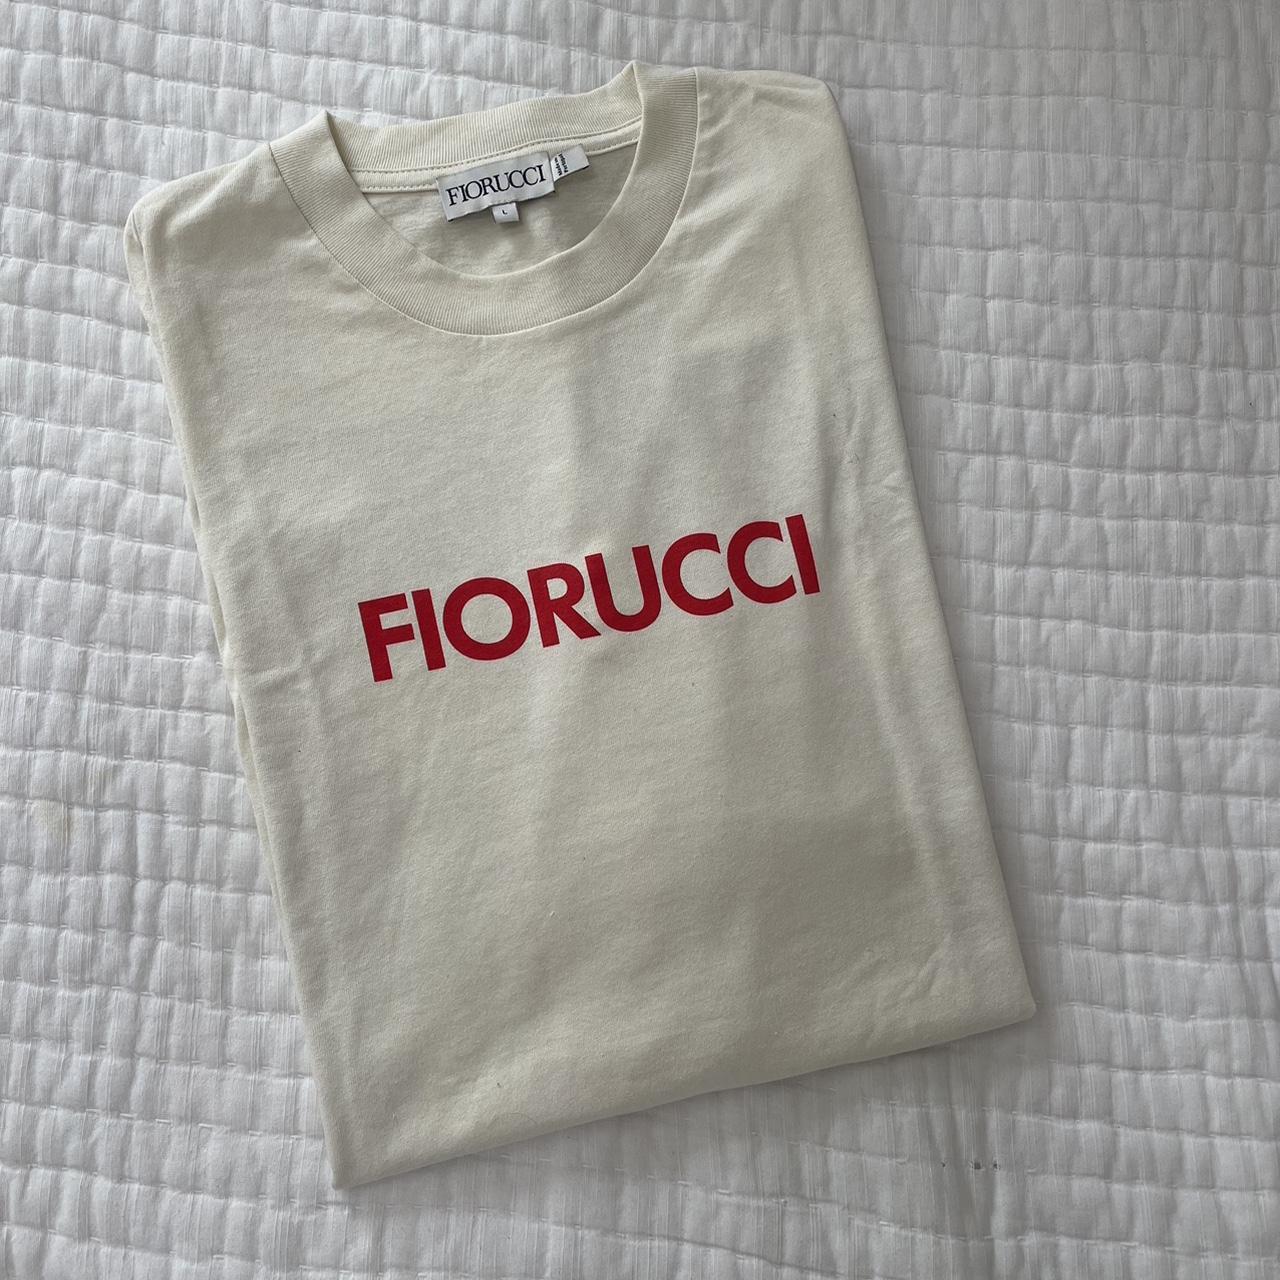 Fiorucci Men's Cream T-shirt